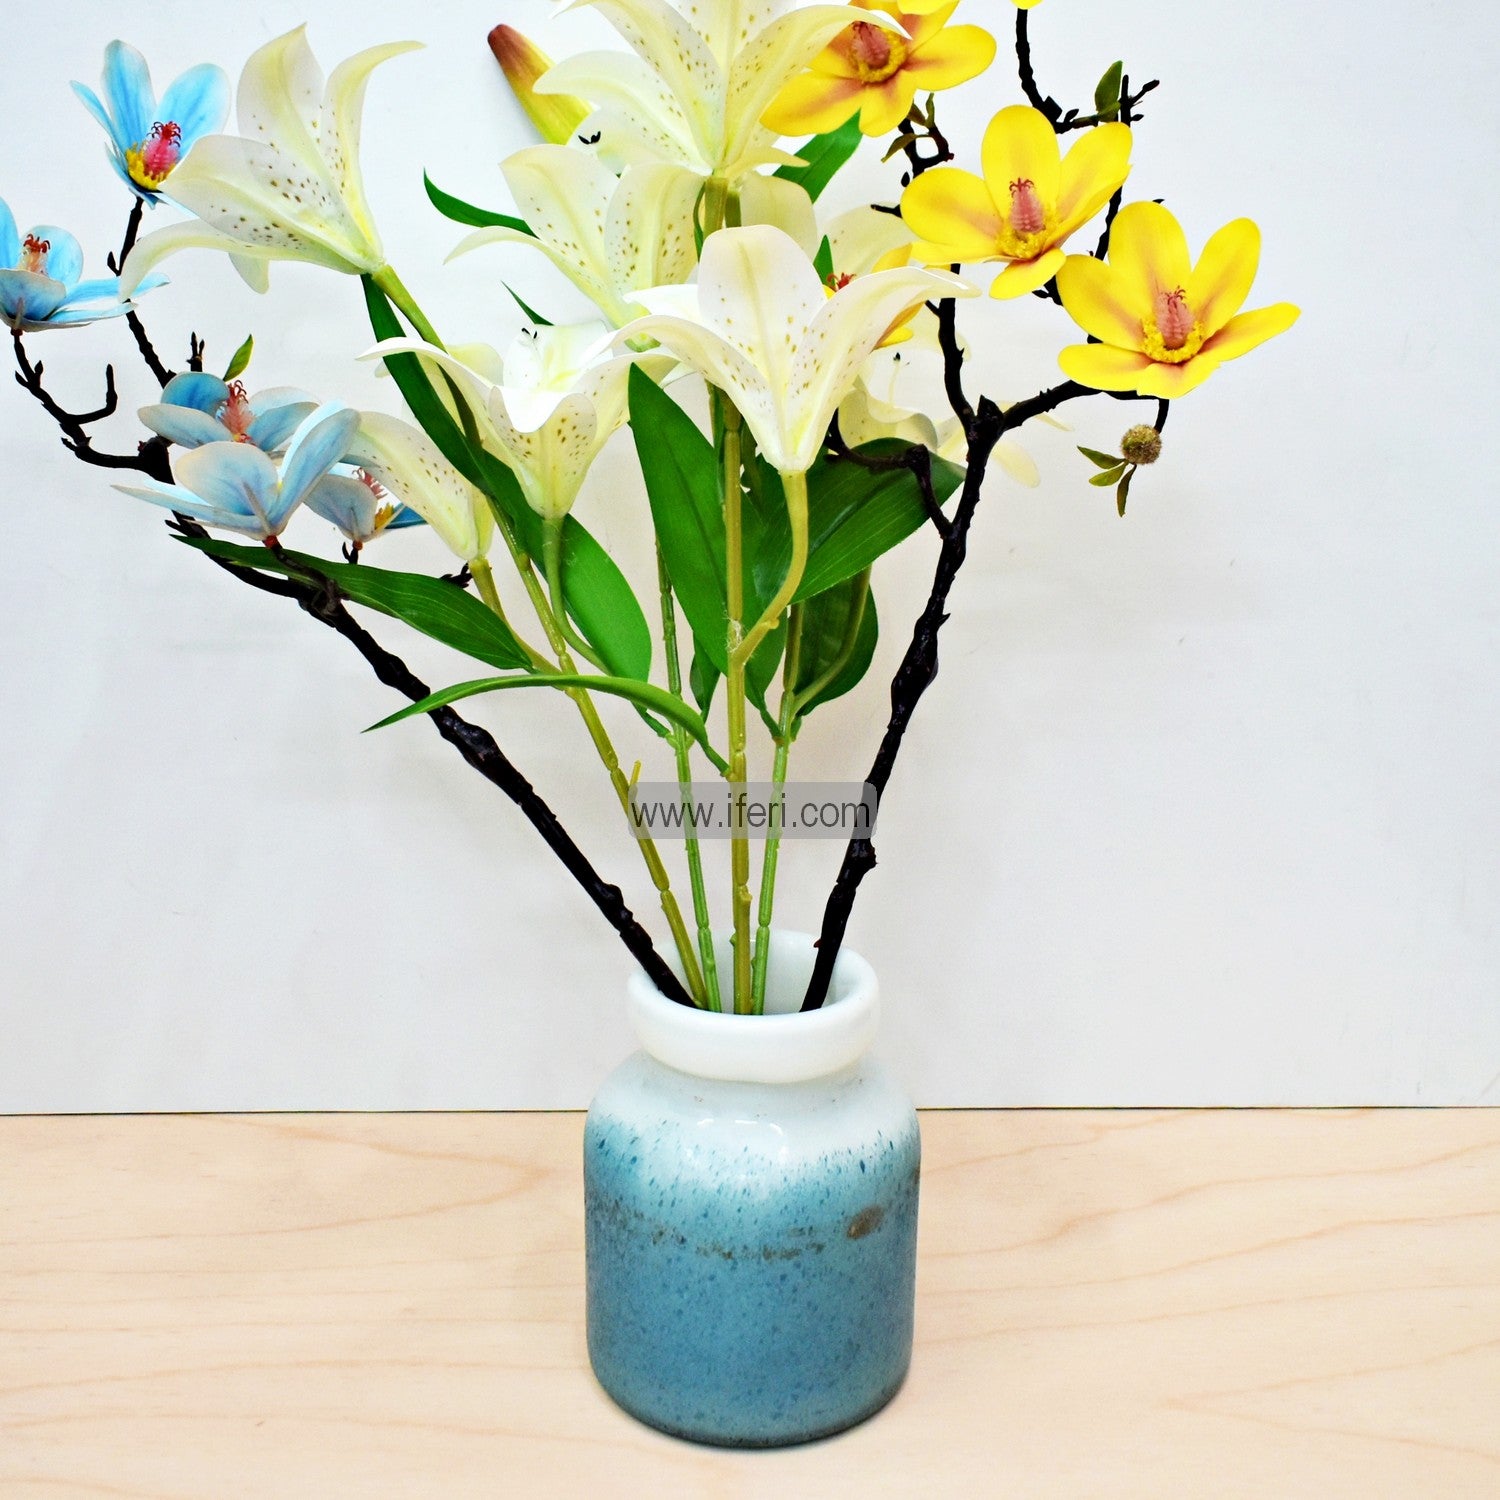 6 Inch Glass Decorative Flower Vase FT1354